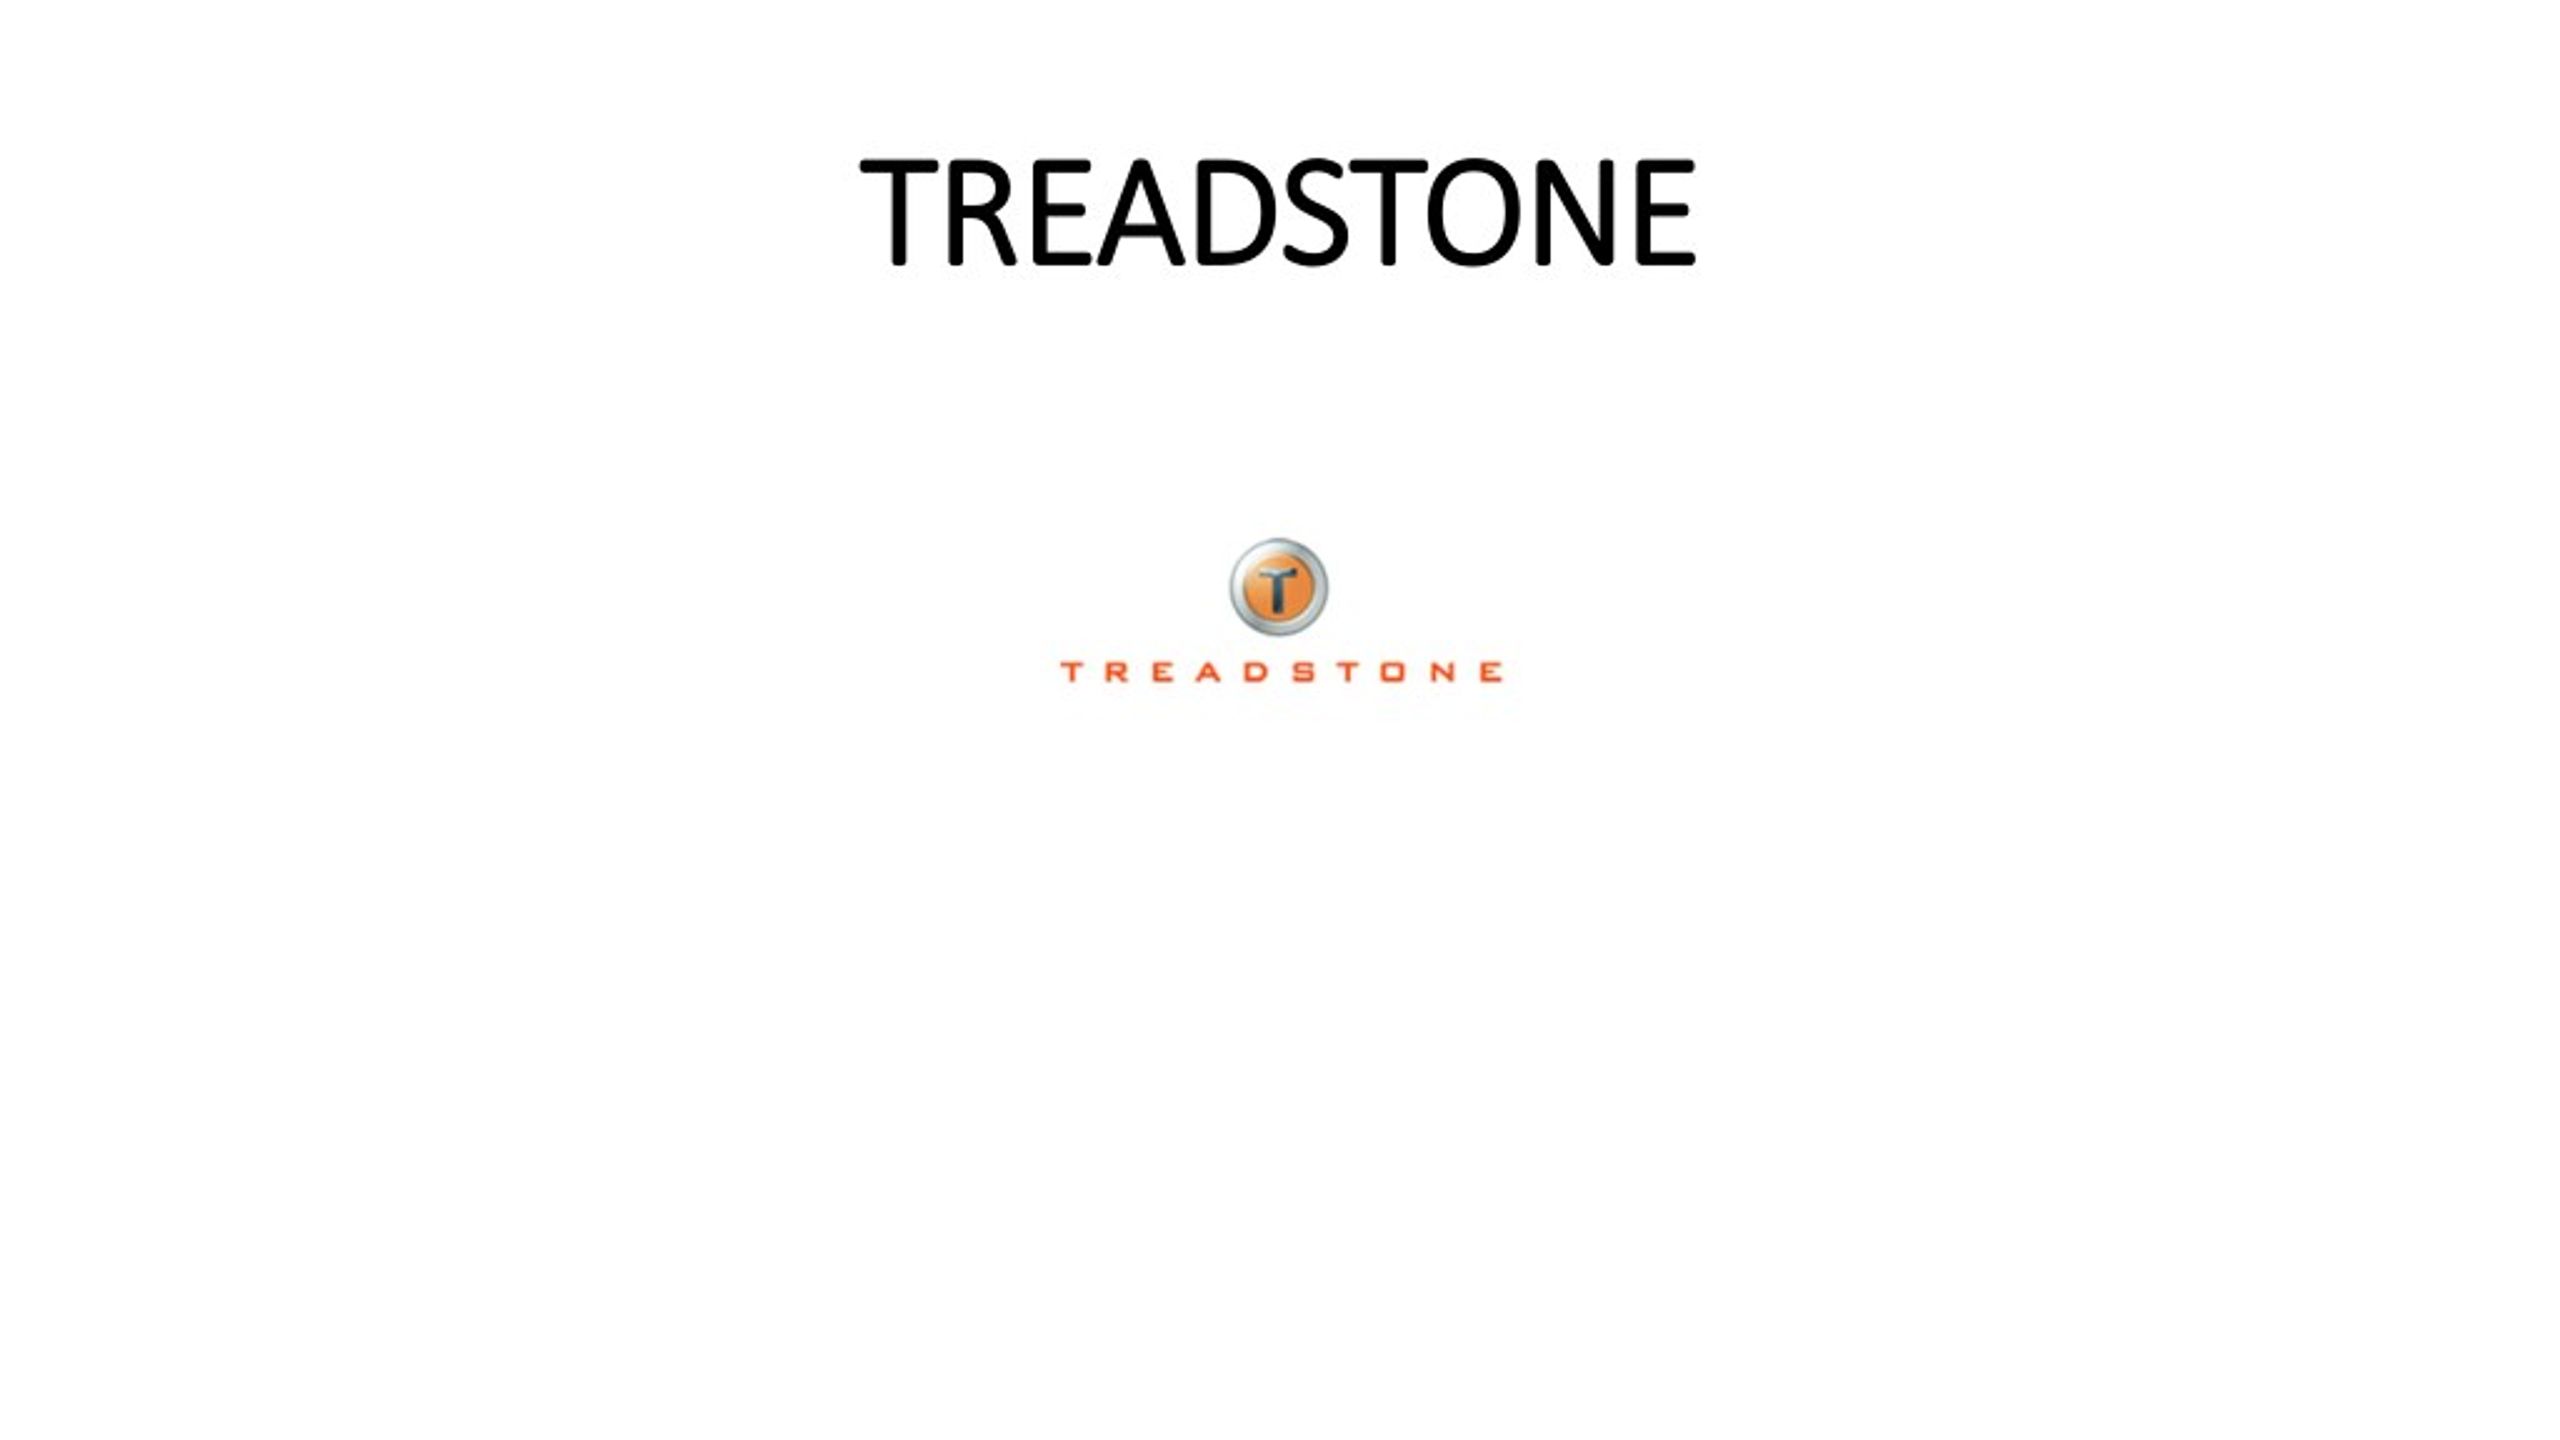 RIGID TOOL BAG - Treadstone Products